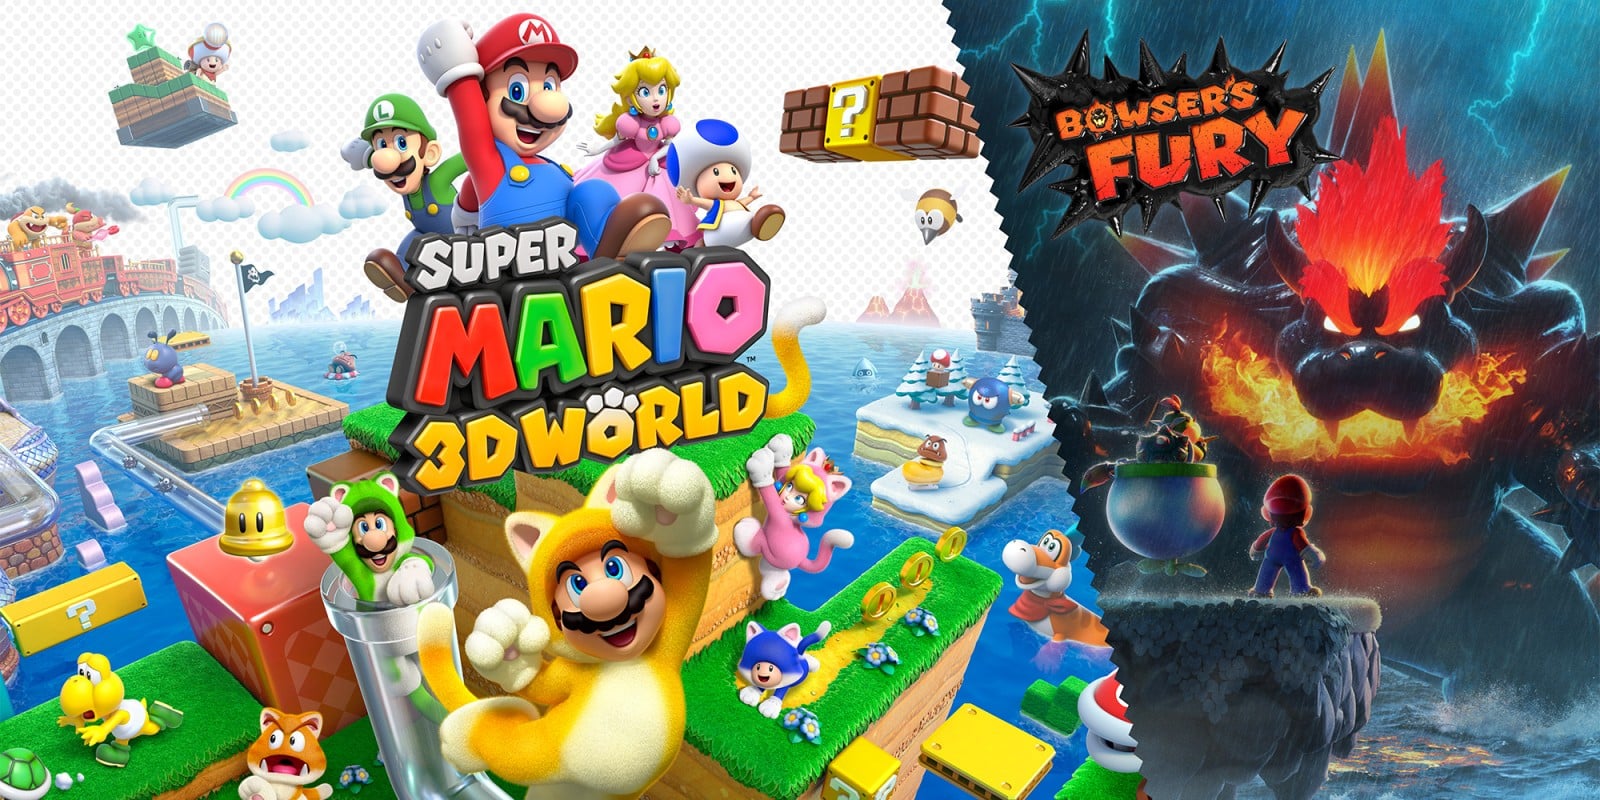 Super-Mario-3D-World-Bowsers-Fury-Banner.jpg